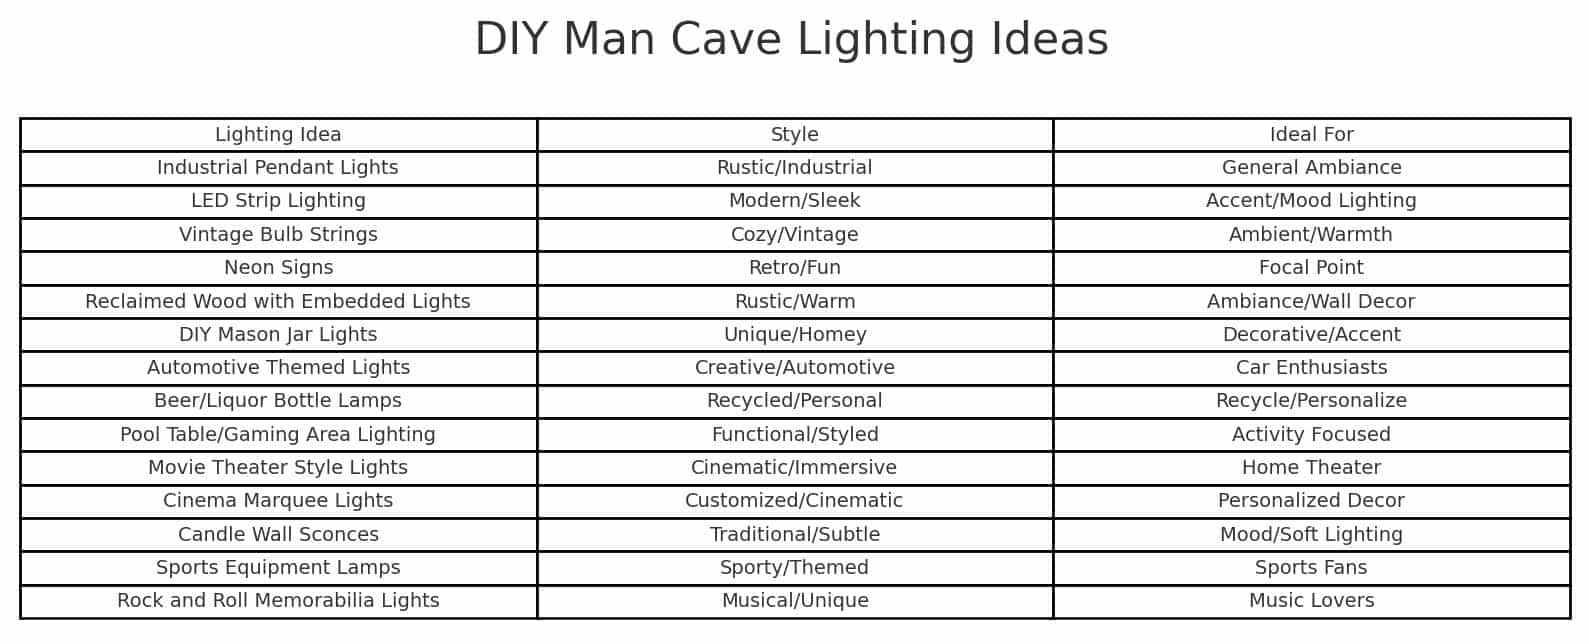 DIY lighting ideas